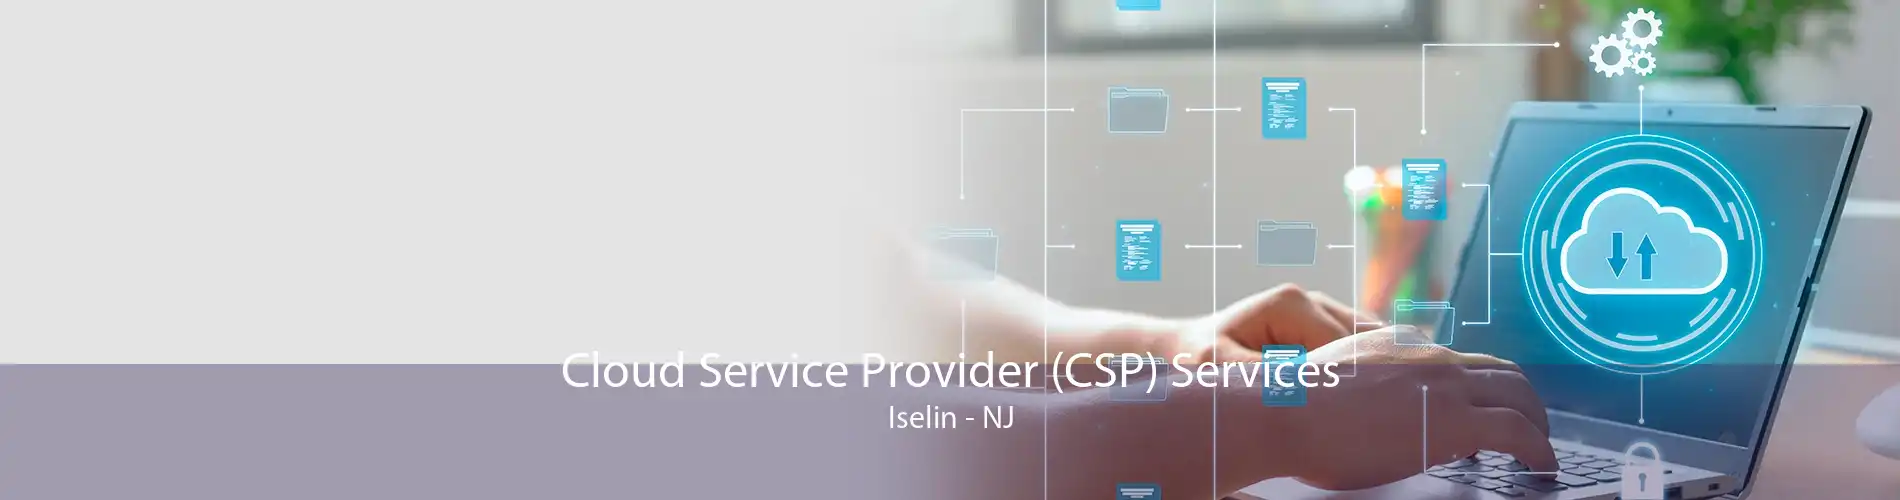 Cloud Service Provider (CSP) Services Iselin - NJ